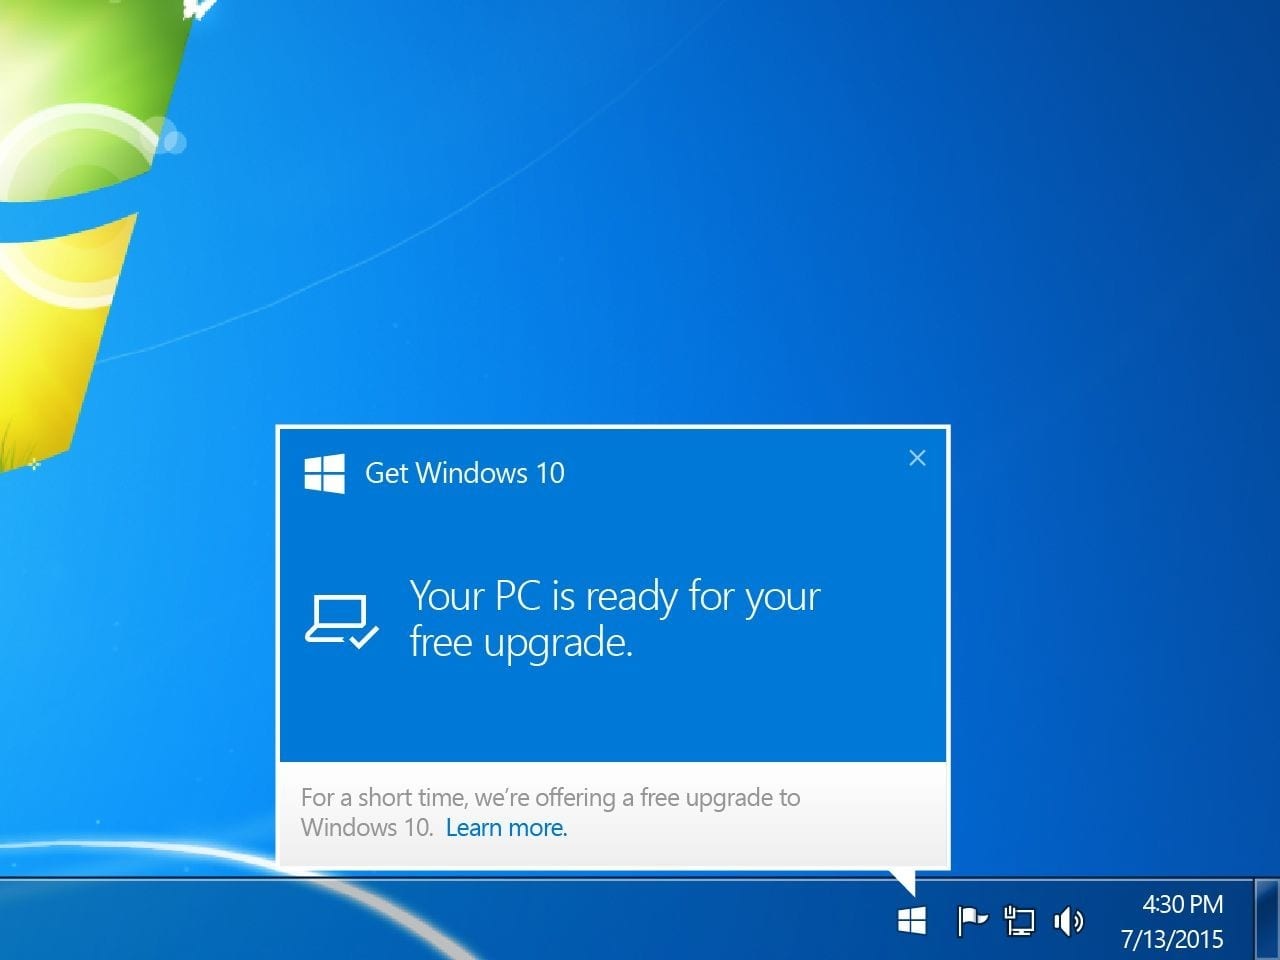 Windows 10 Update 